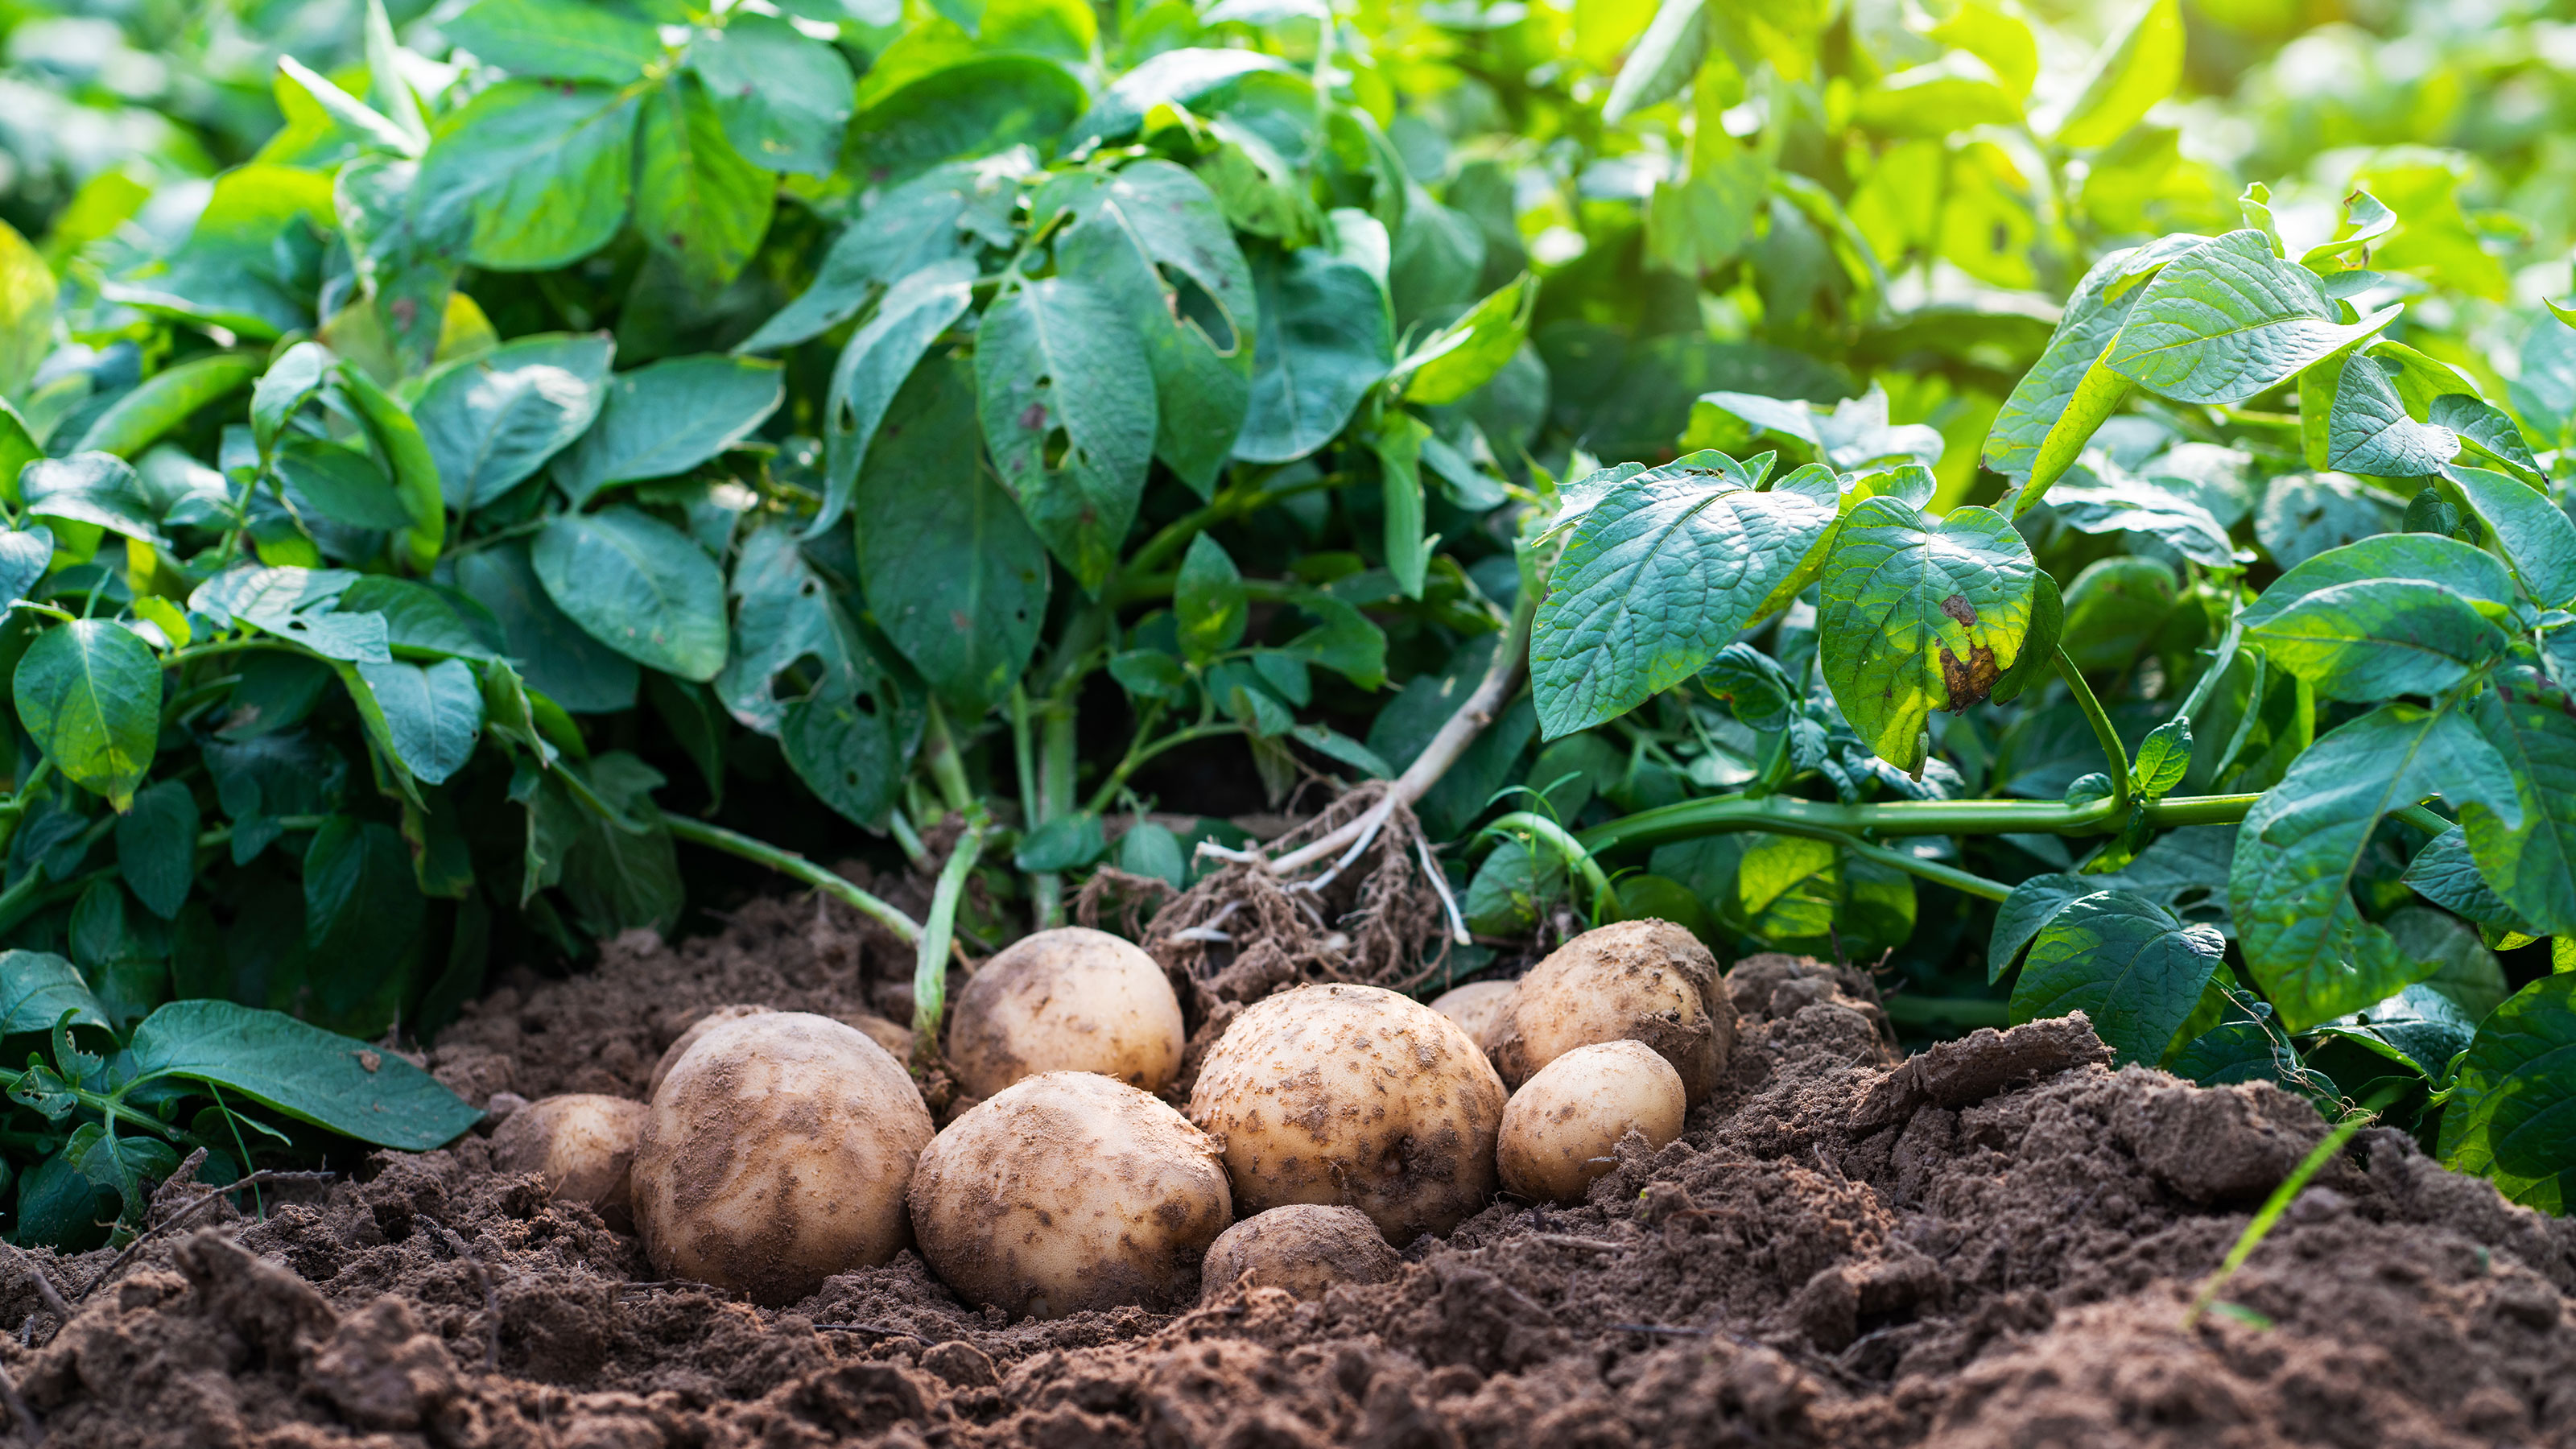 Image of Garlic and potatoes companion planting image 1